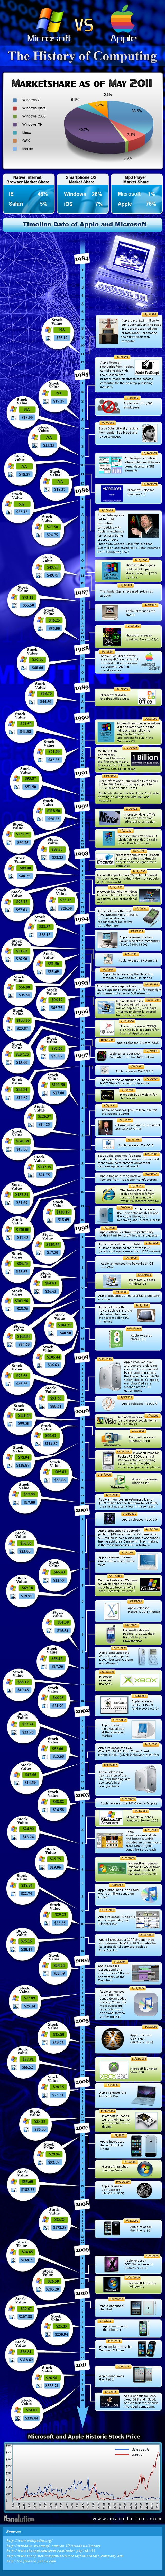 Microsoft vs. Apple: The History of Computing [InfoGraphic]